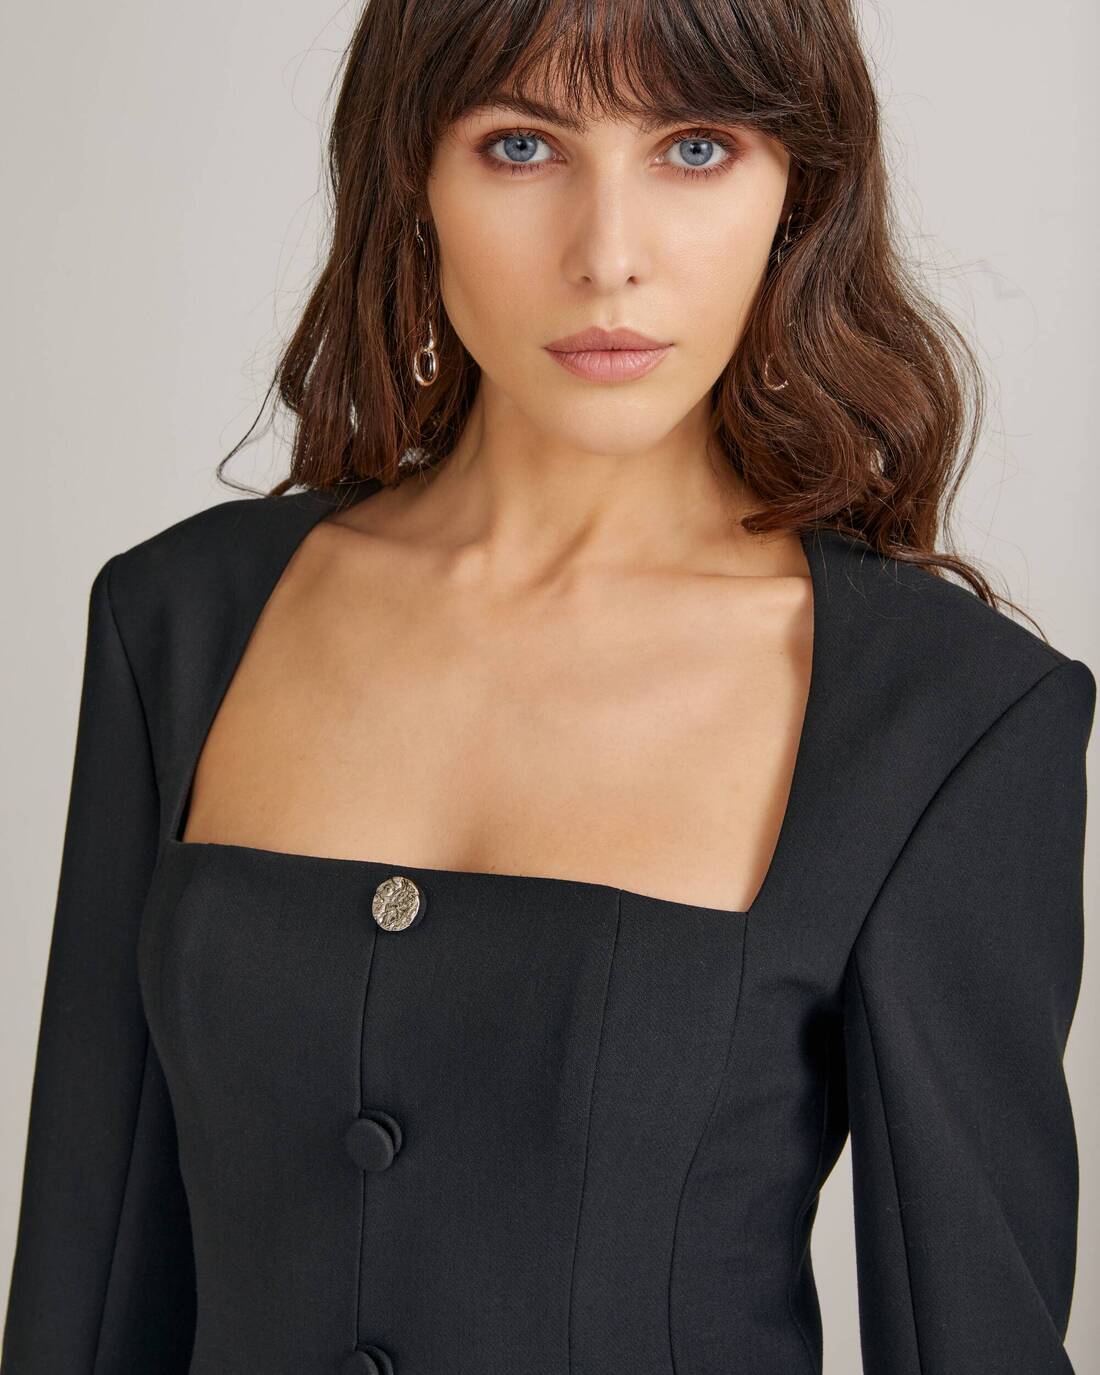 Jacket dress with square neckline 